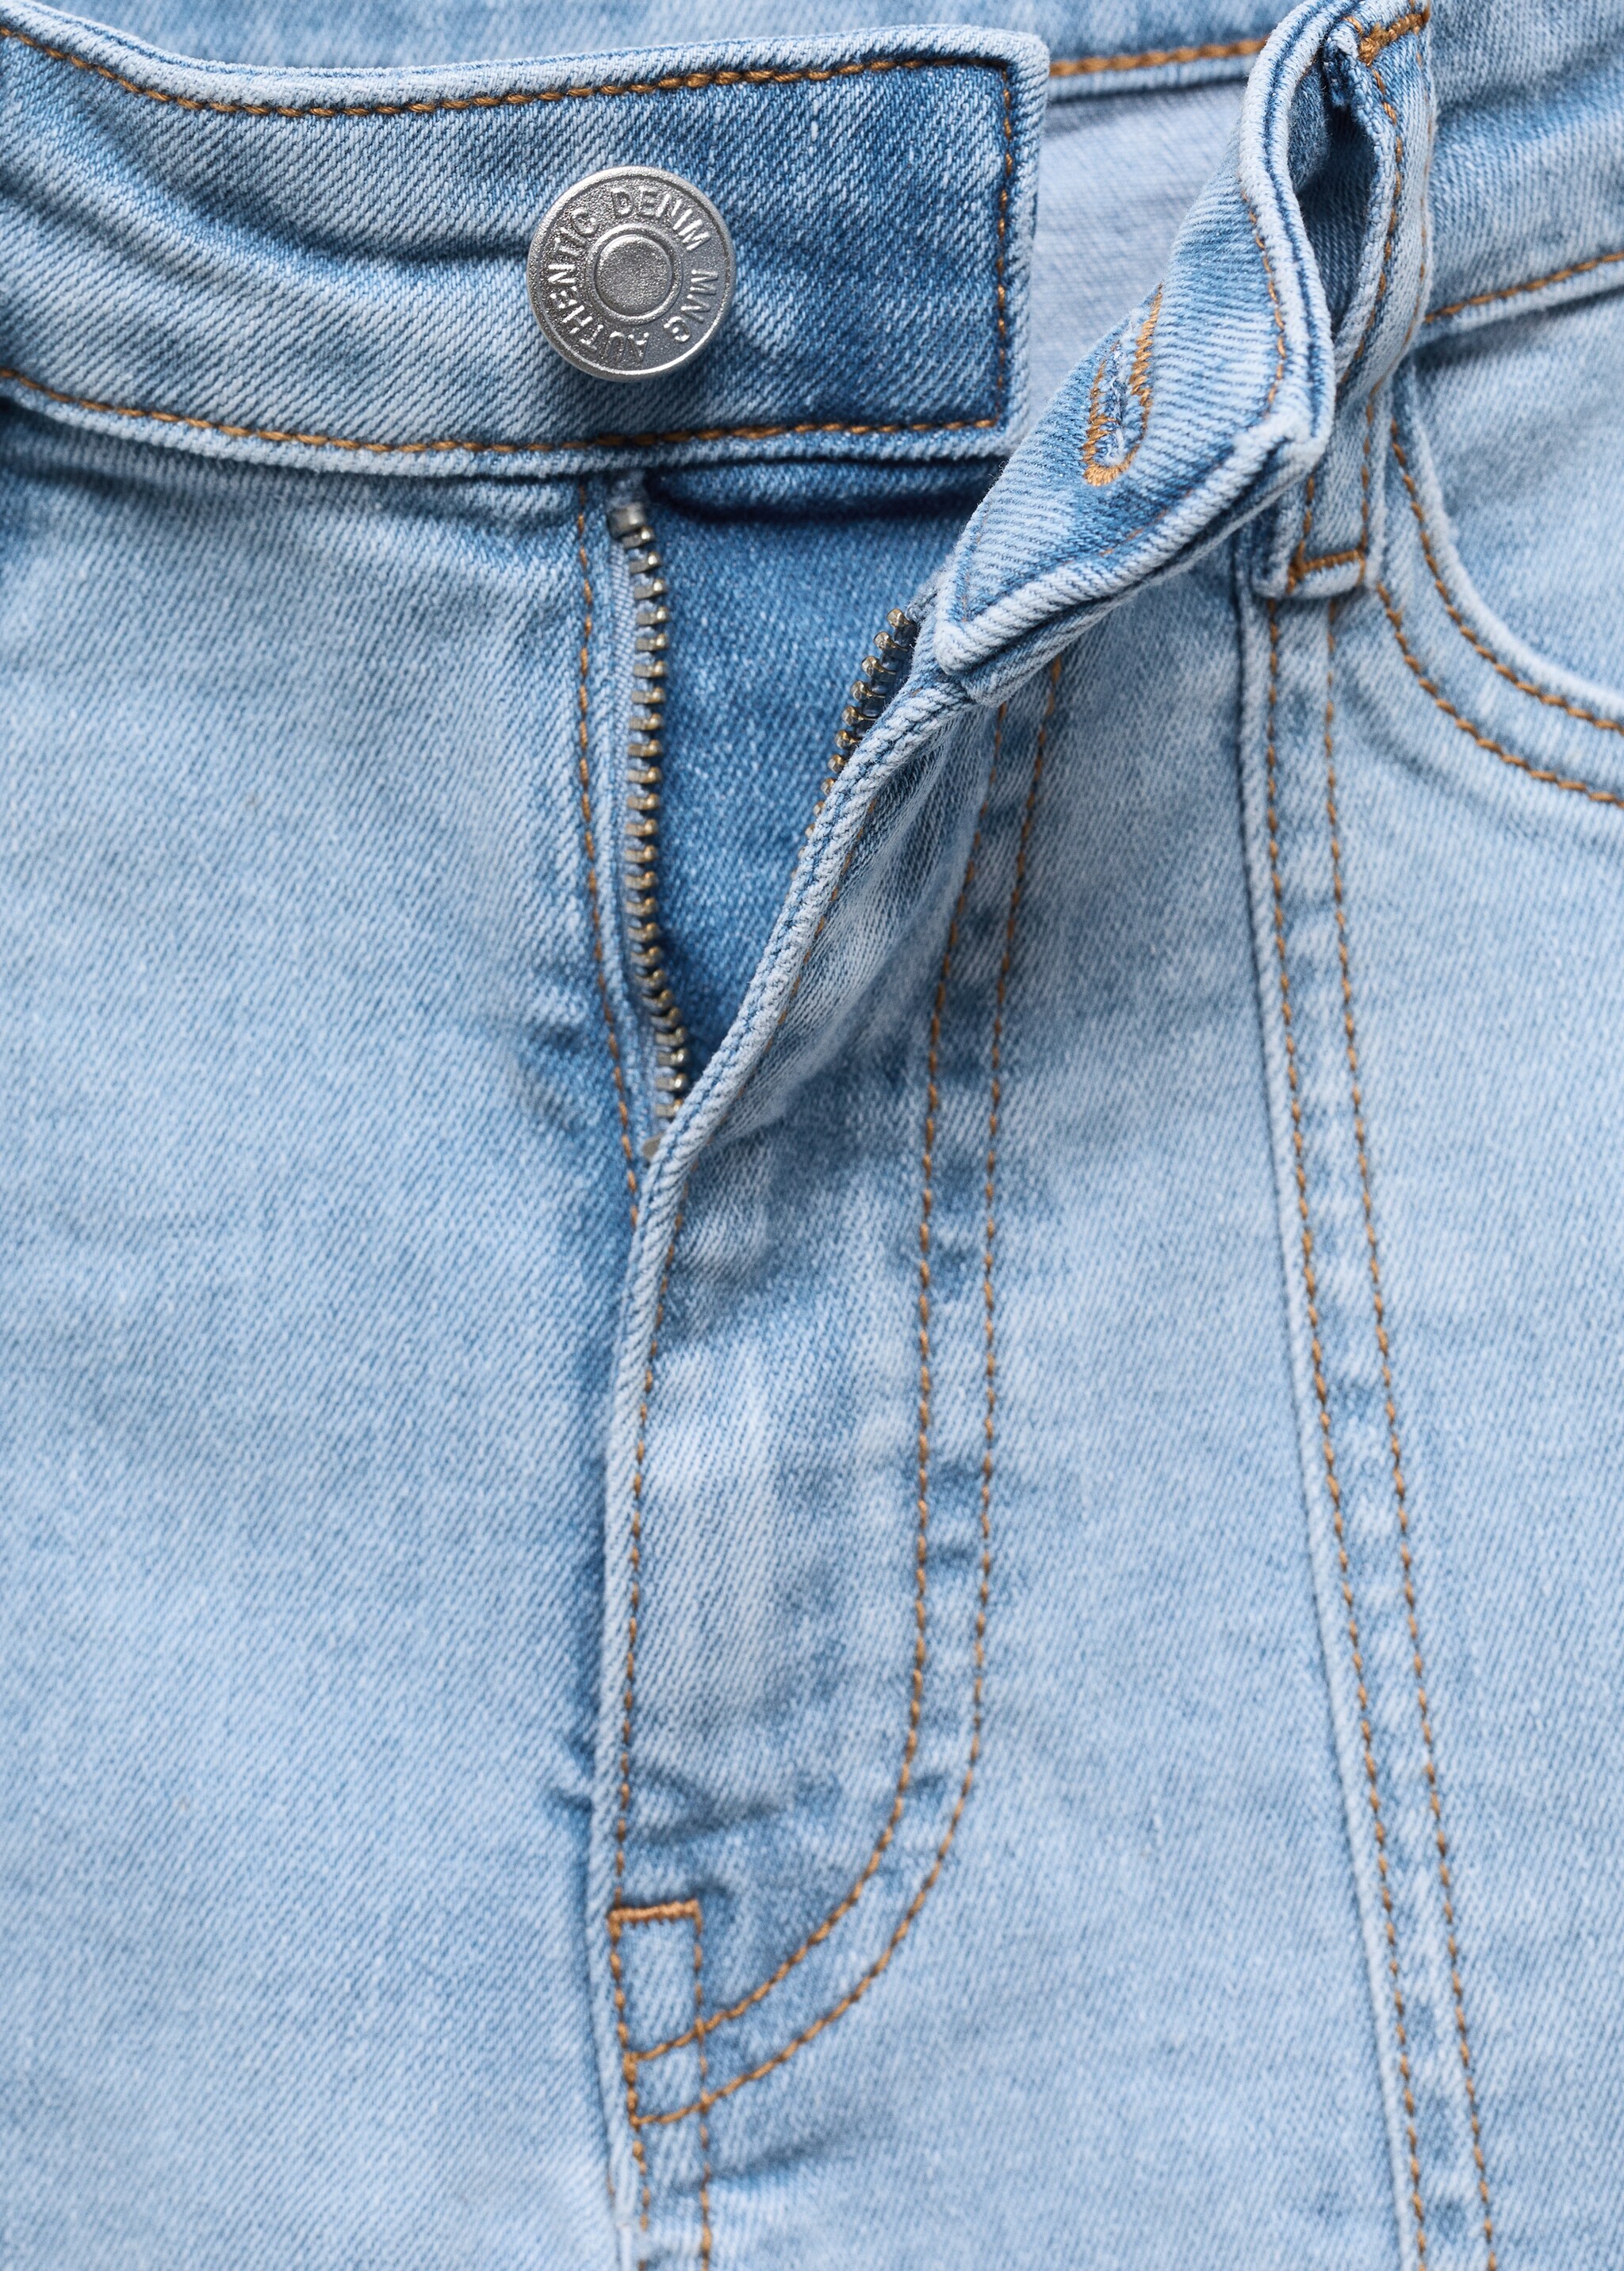 Medium-waist denim shorts - Details of the article 8